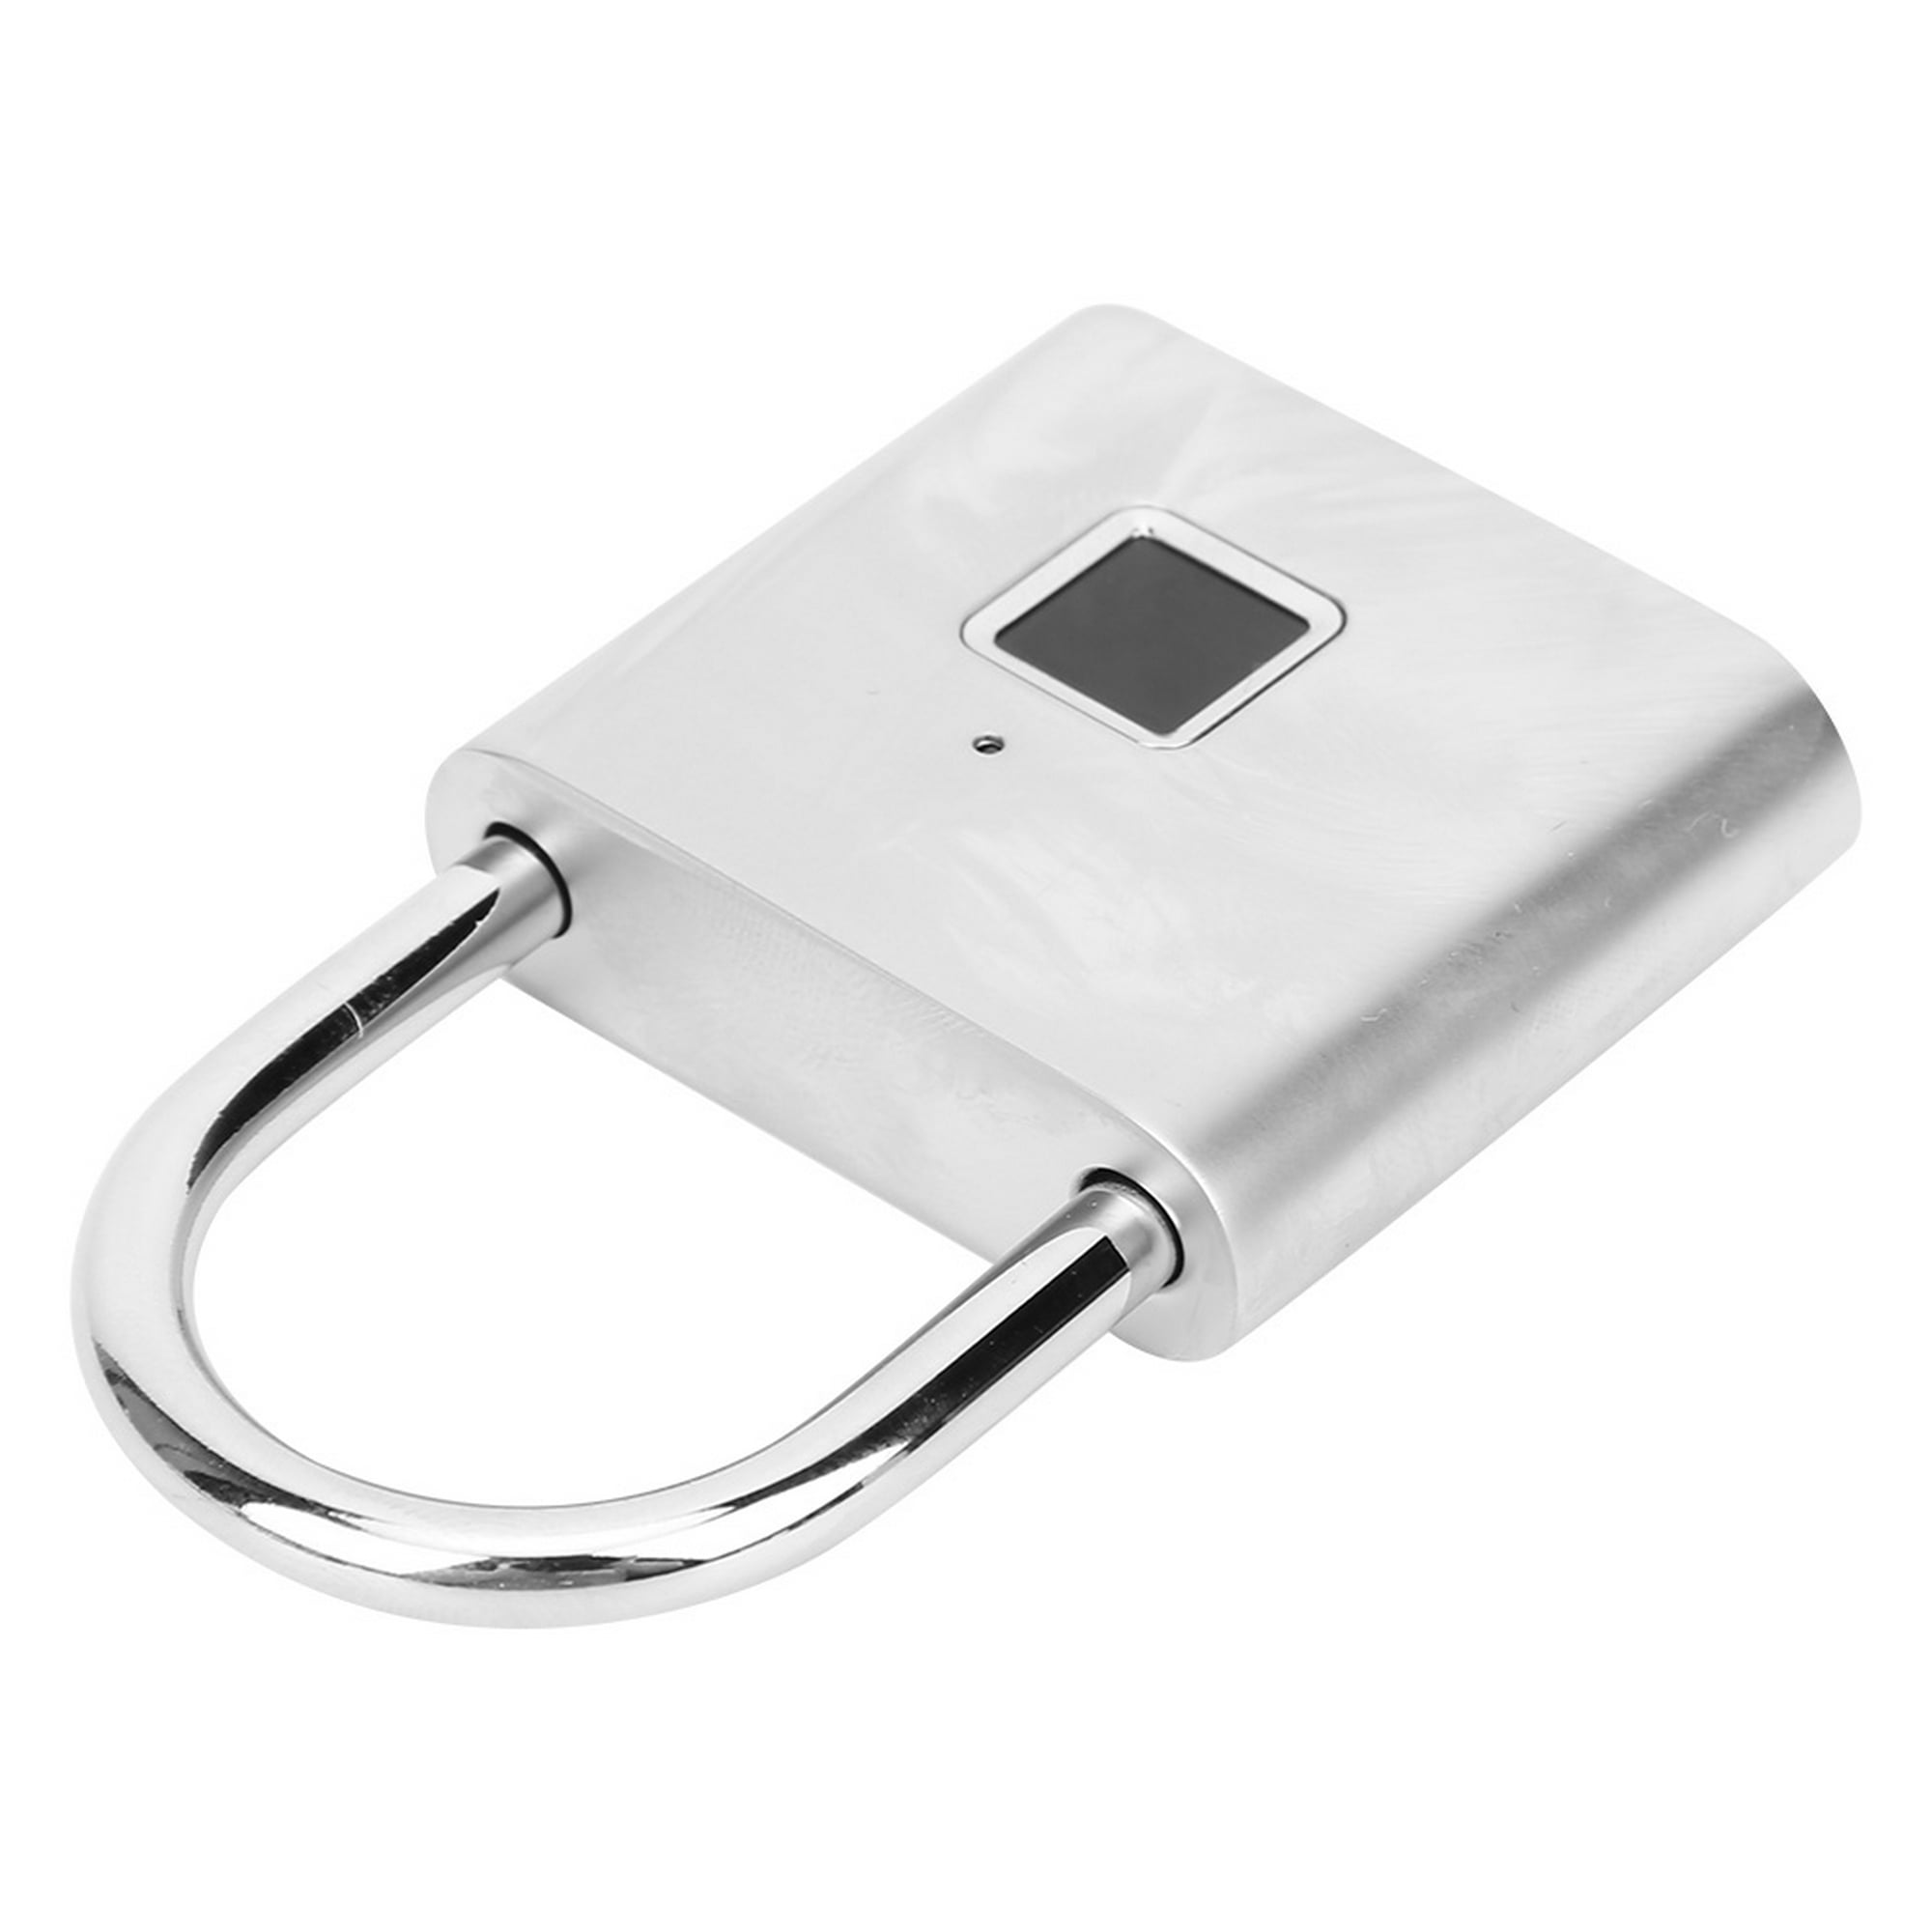 Comprar Mini candado de huella digital, cerradura de huella digital  recargable por USB, 20 huellas dactilares IPX2 a prueba de salpicaduras